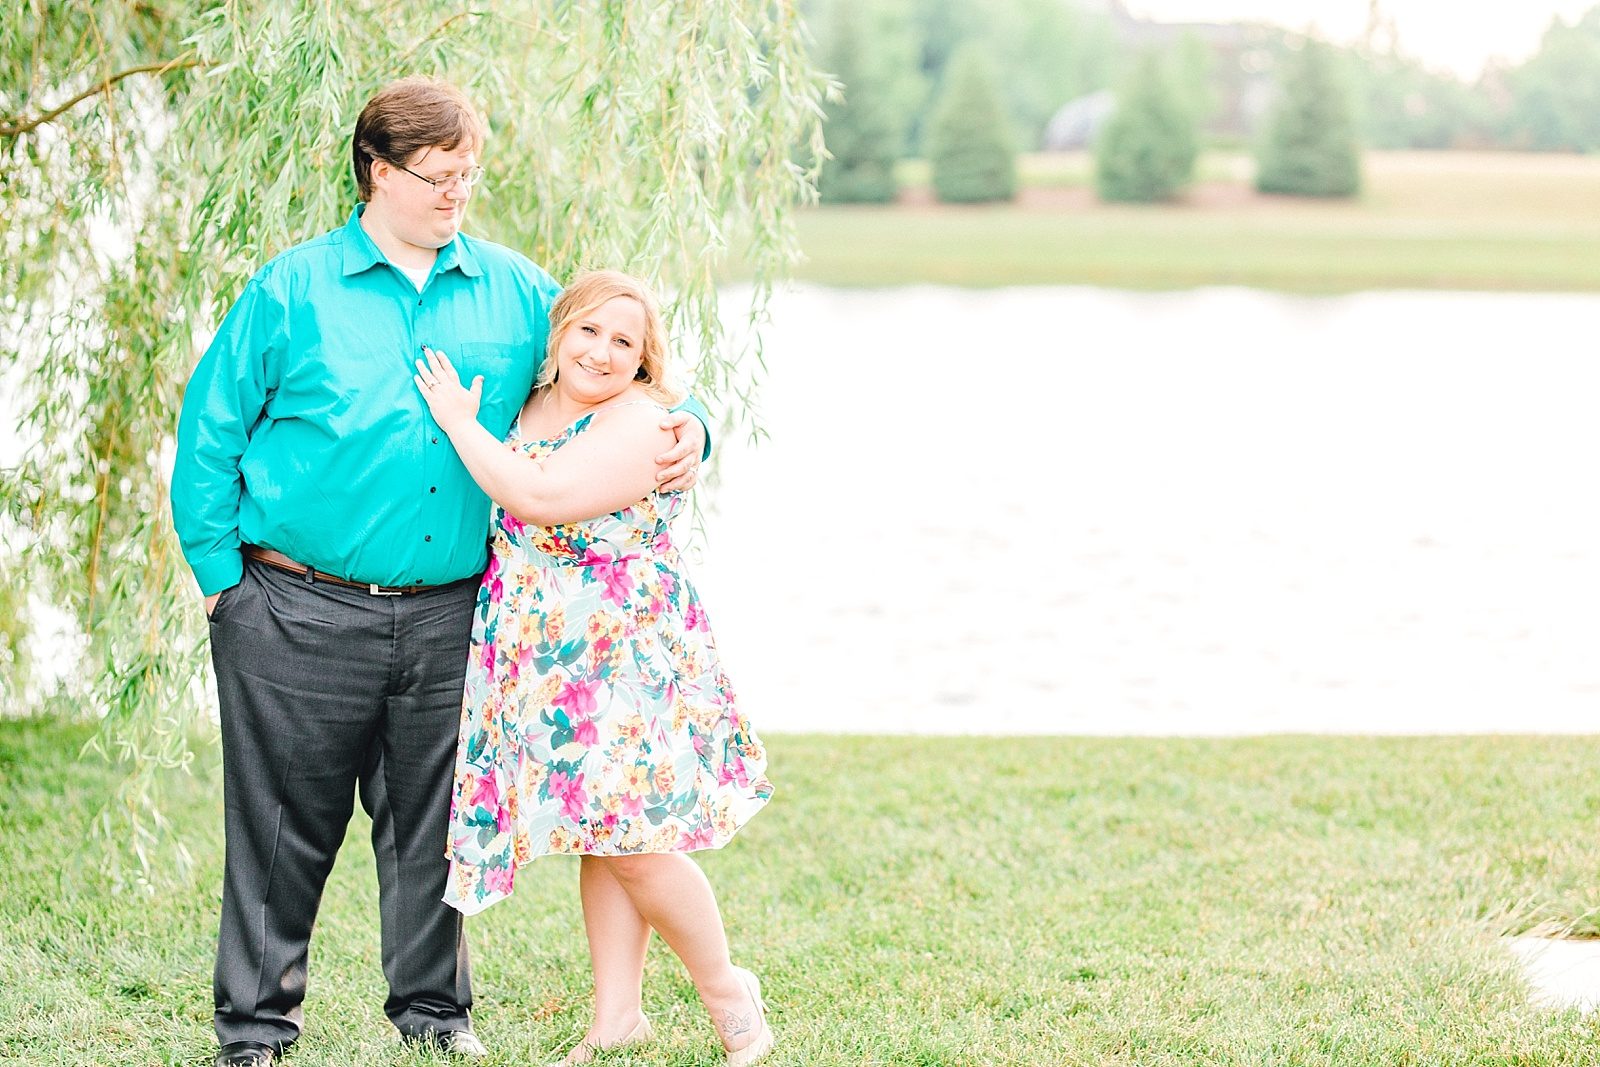 Wedding Anniversary at Coxhall Gardens | Aubrey Lynn Photography | Indianapolis Wedding Photographer